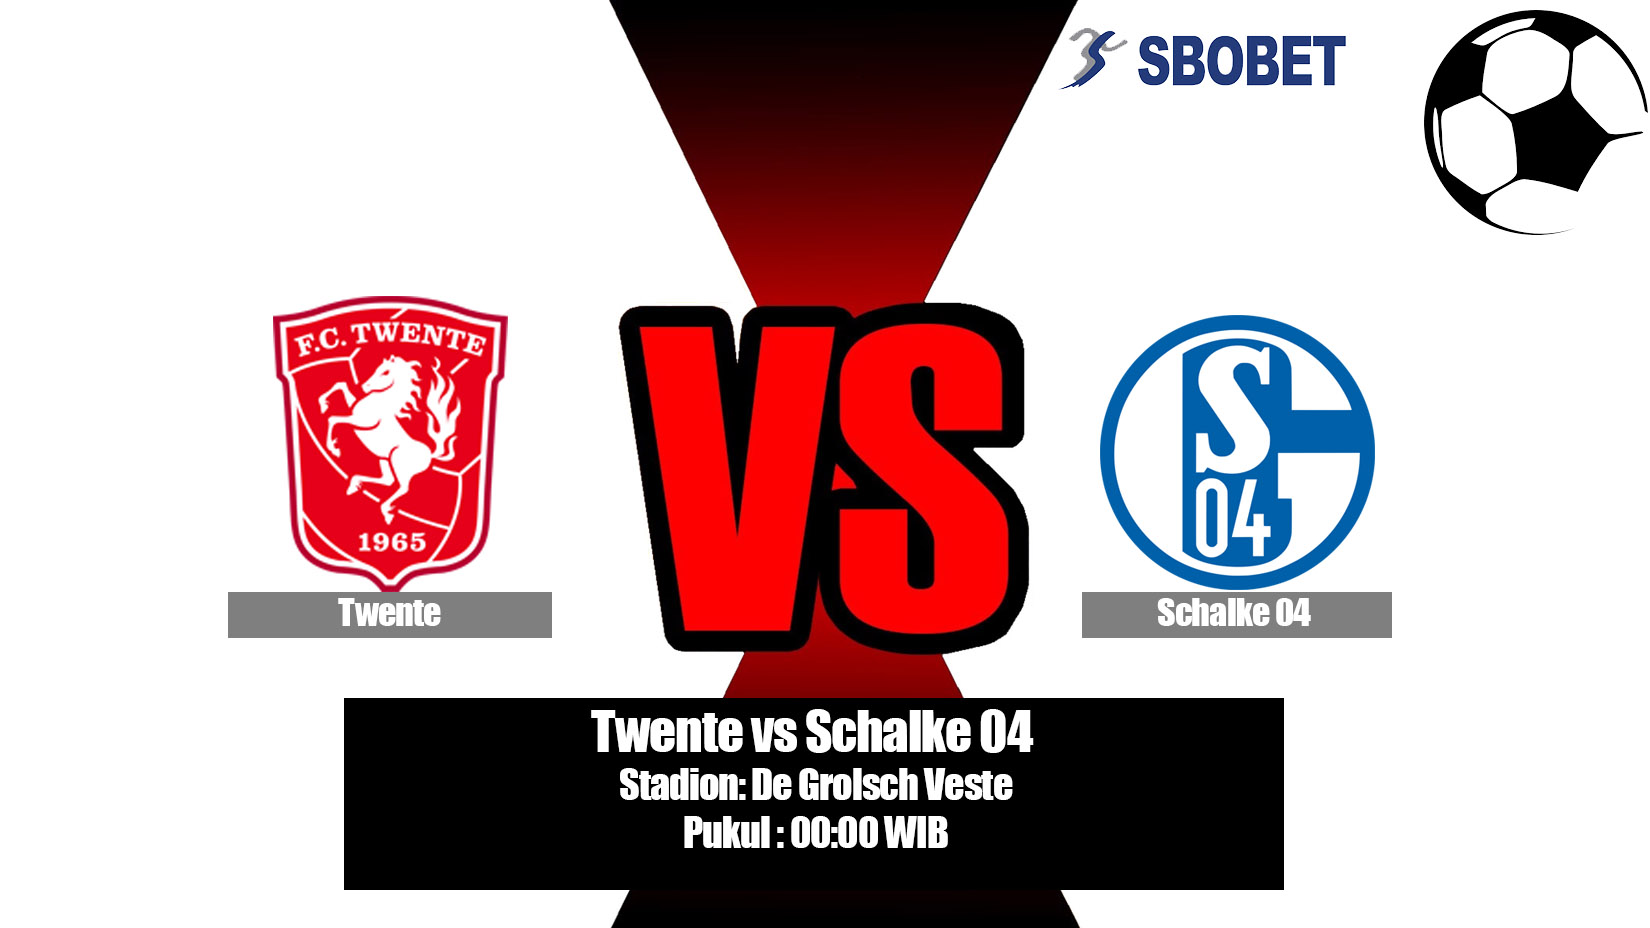 Prediksi Bola Twente vs Schalke 04 24 Juli 2019